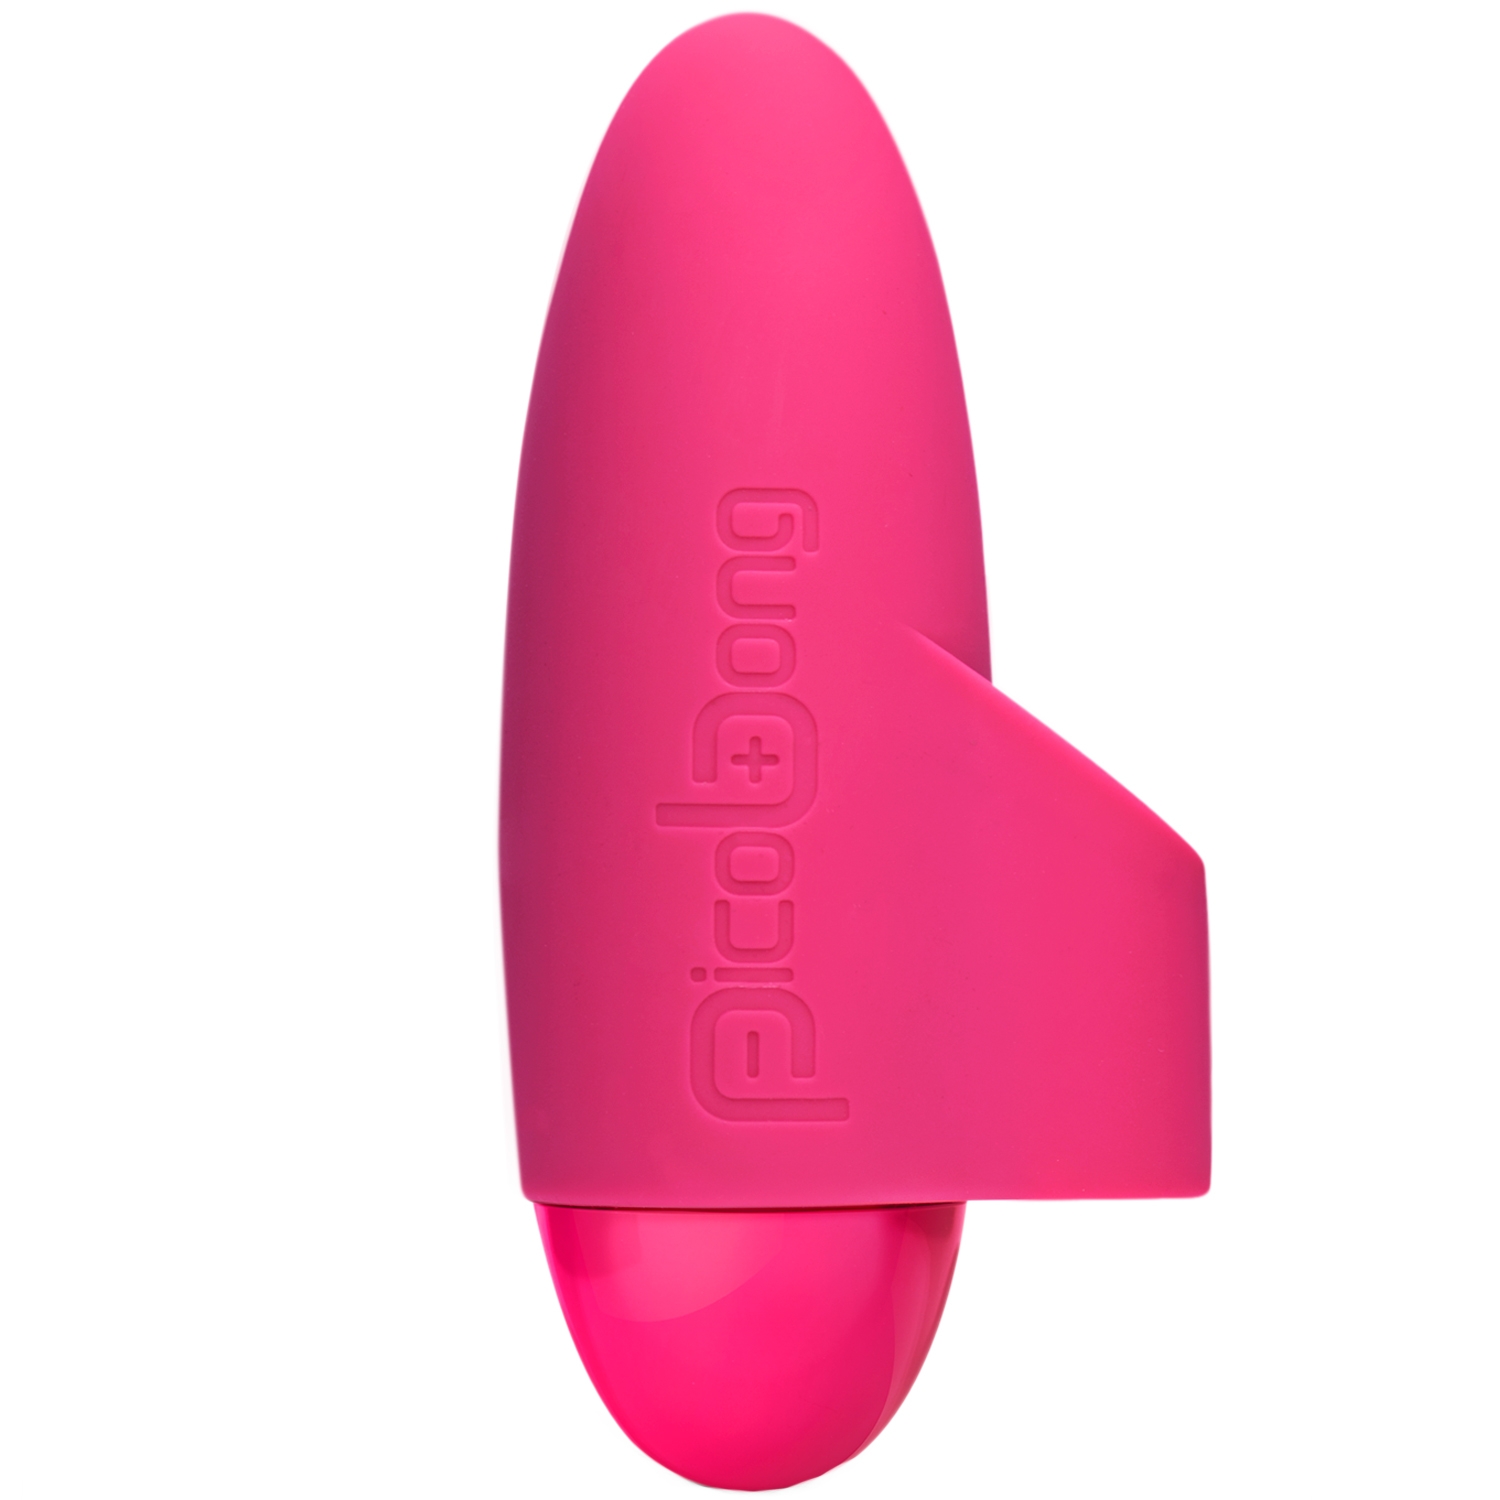 PicoBong Ipo 2 Finger Vibrator 12 speed - Rose